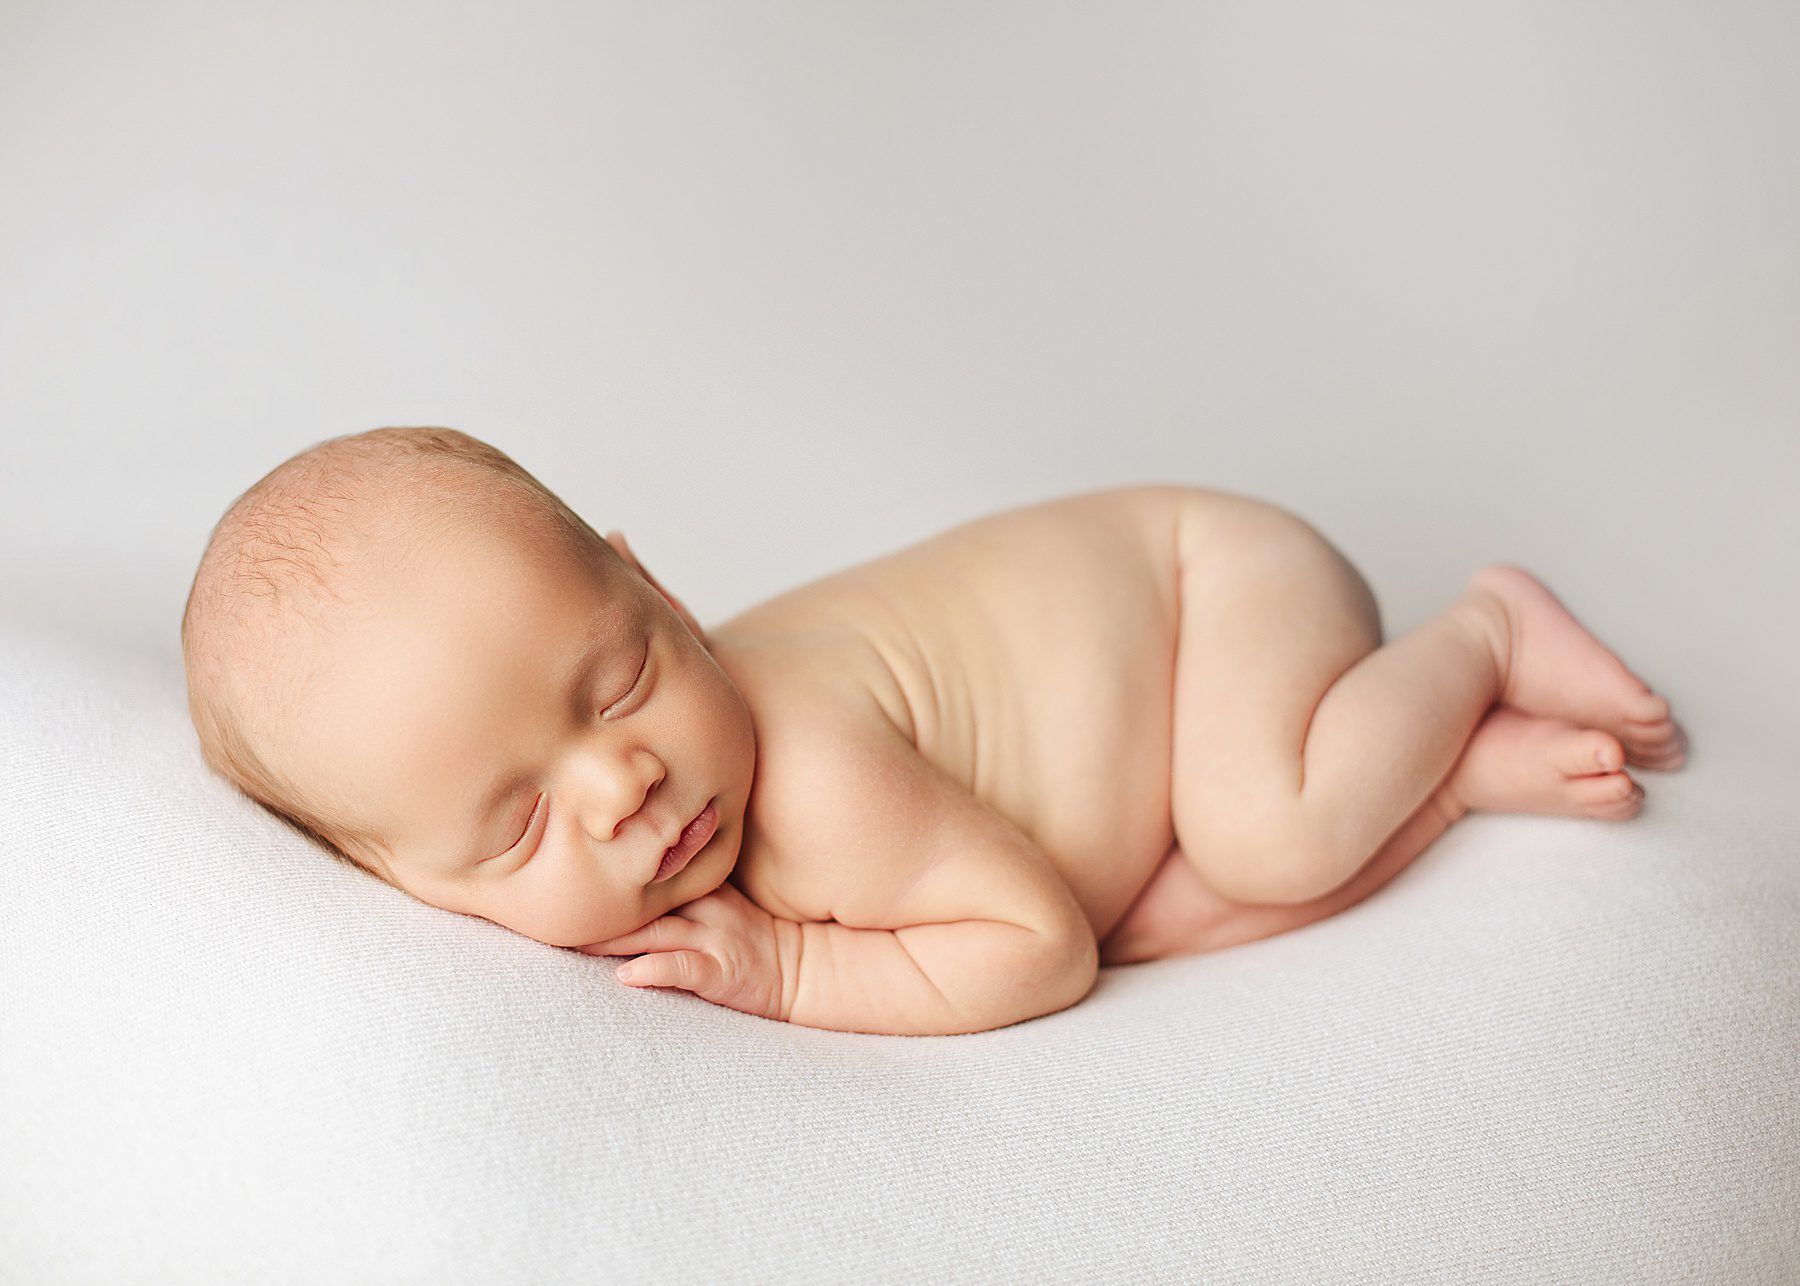 edmonton newborn photographers, newborn photography edmonton, tucked in pose, newborn boy poses, leduc newborn photographer, side sleeper pose